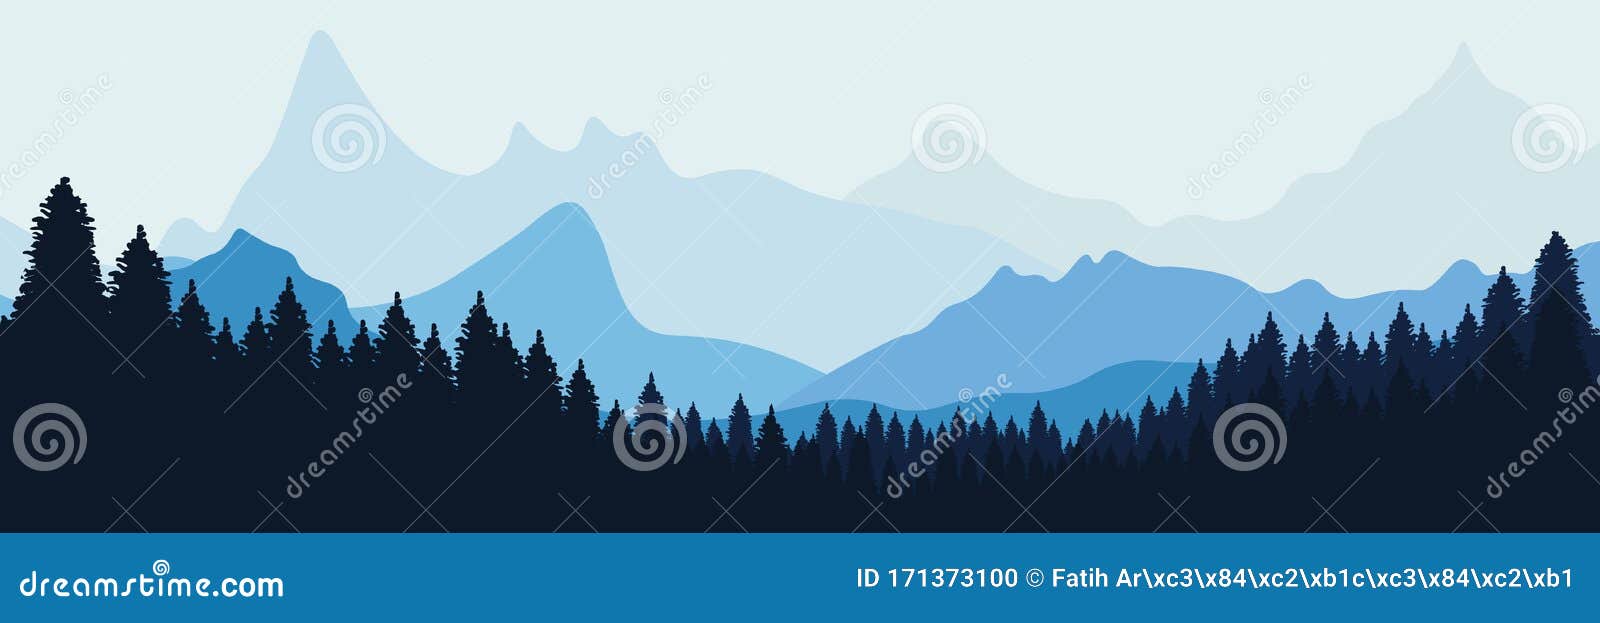 Avikalp Exclusive Awi7625 Mountain Nature Panoramic Sky Landscape Ka kars  HD Wallpaper91cm x 60cm  Amazonin Home Improvement